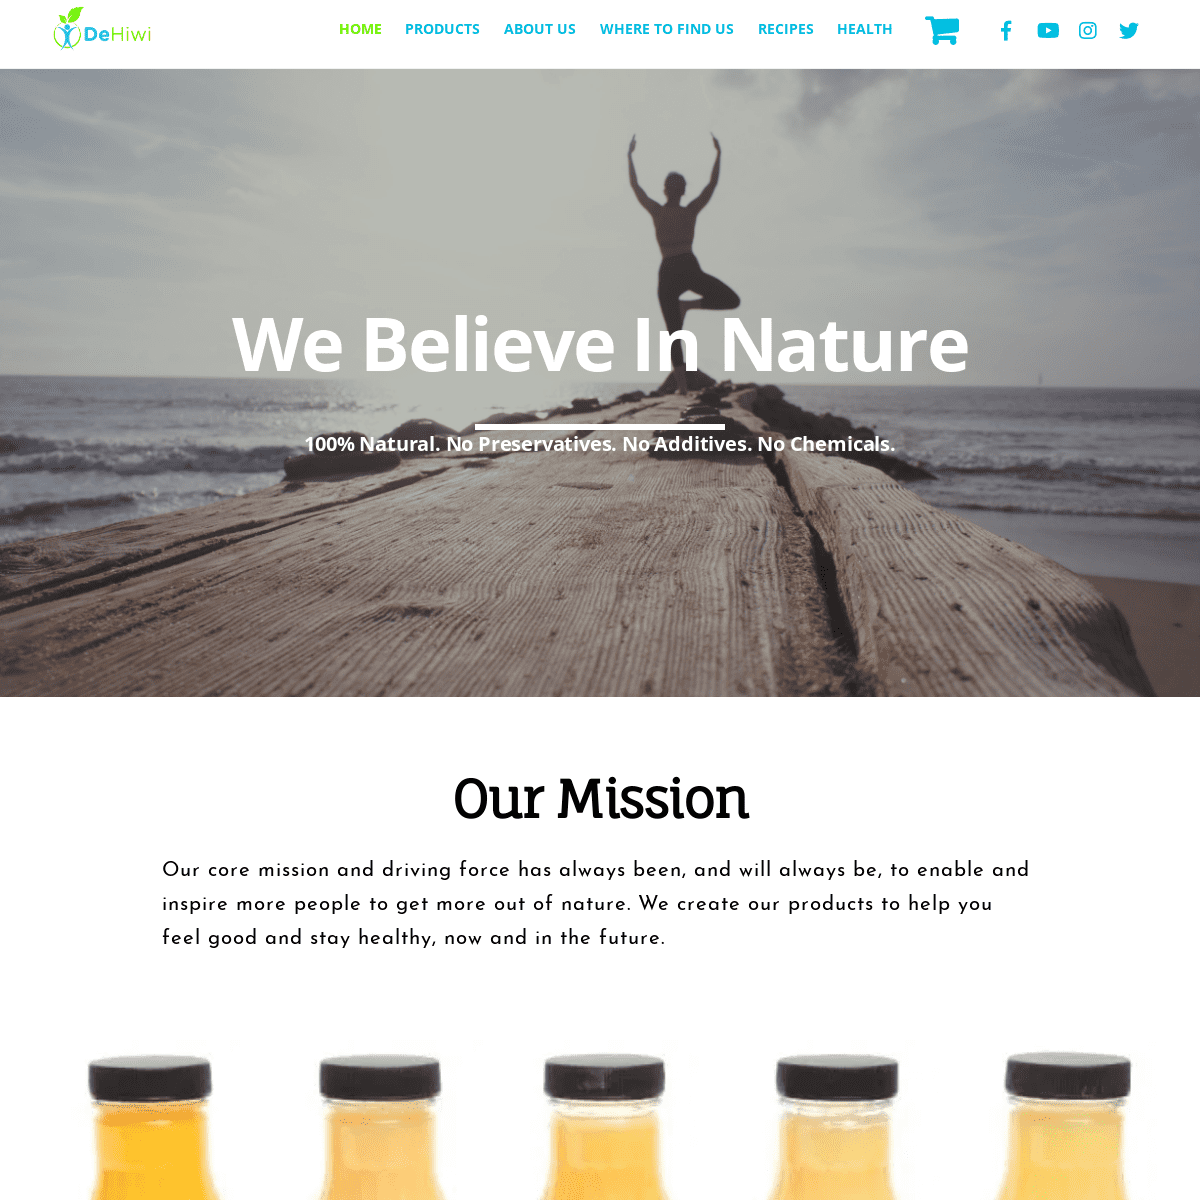 DeHiwi – We Believe In Nature.